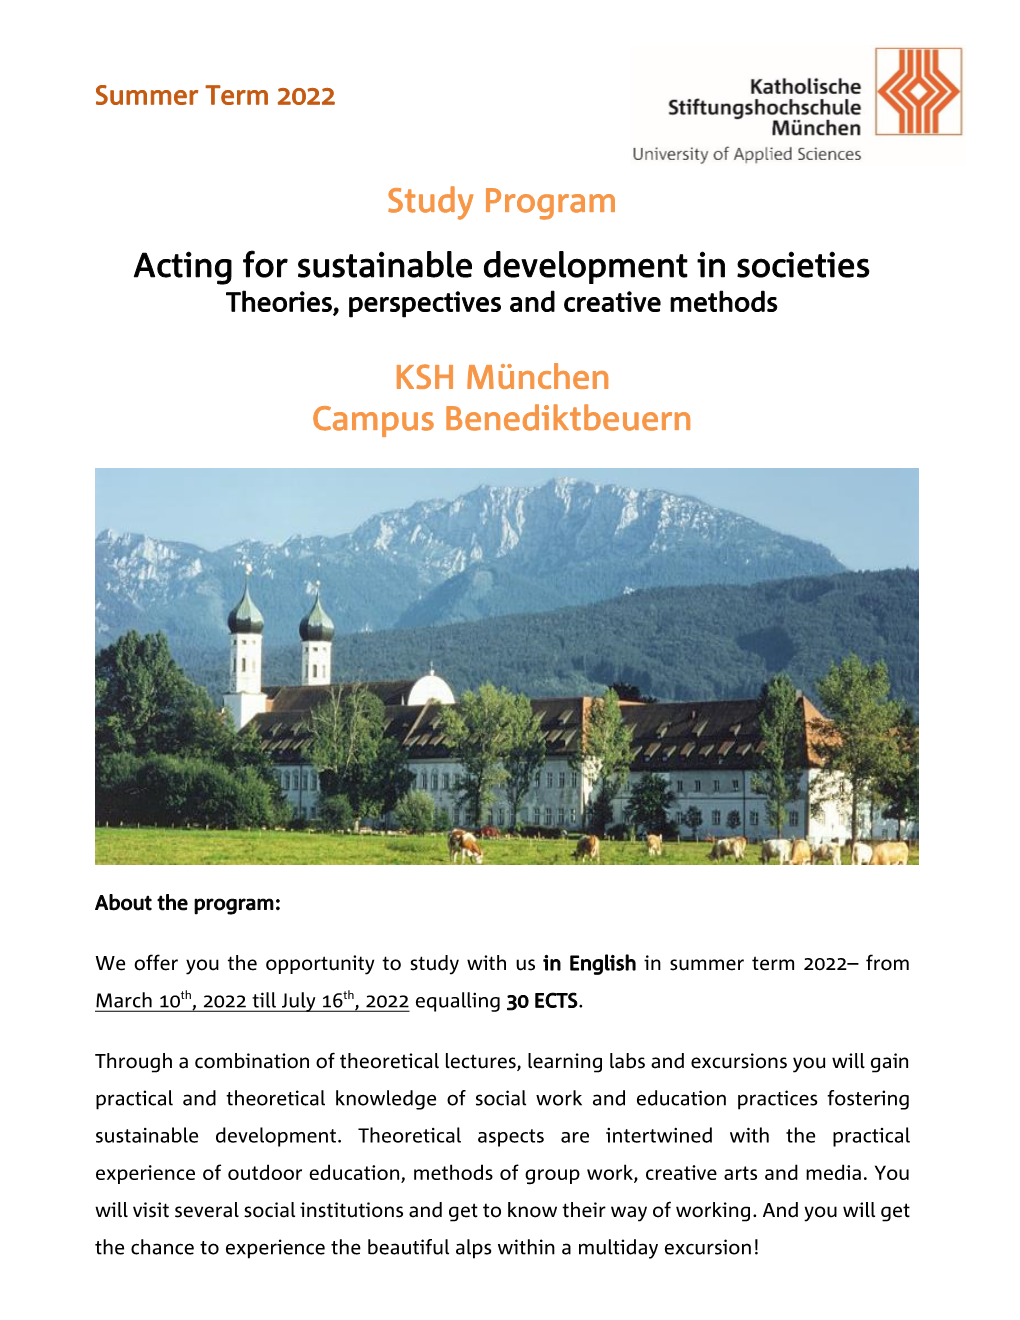 Study Program Acting for Sustainable Development in Societies KSH